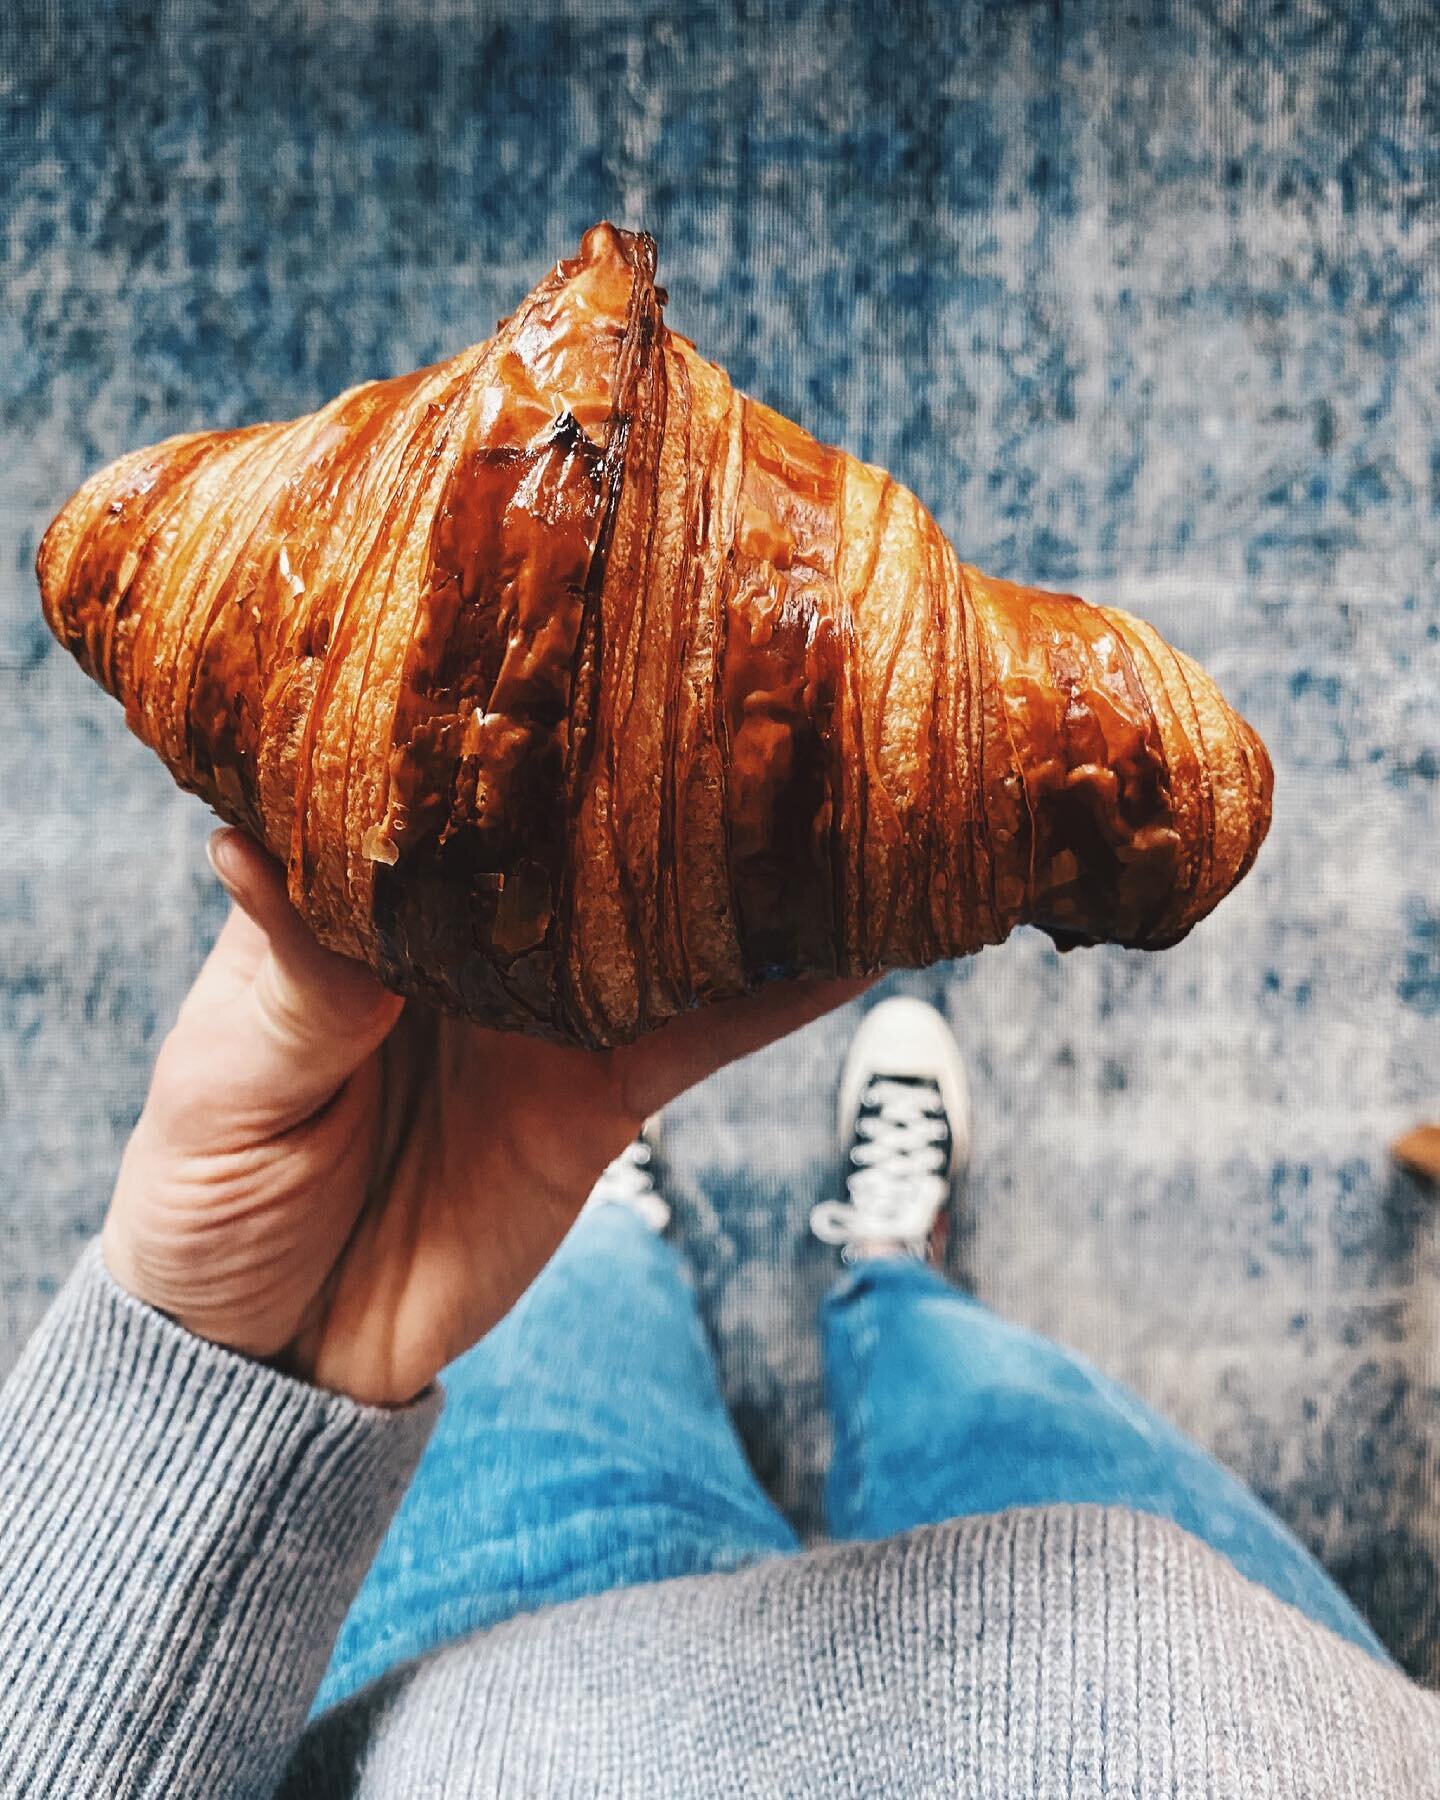 Croissant content only 👀